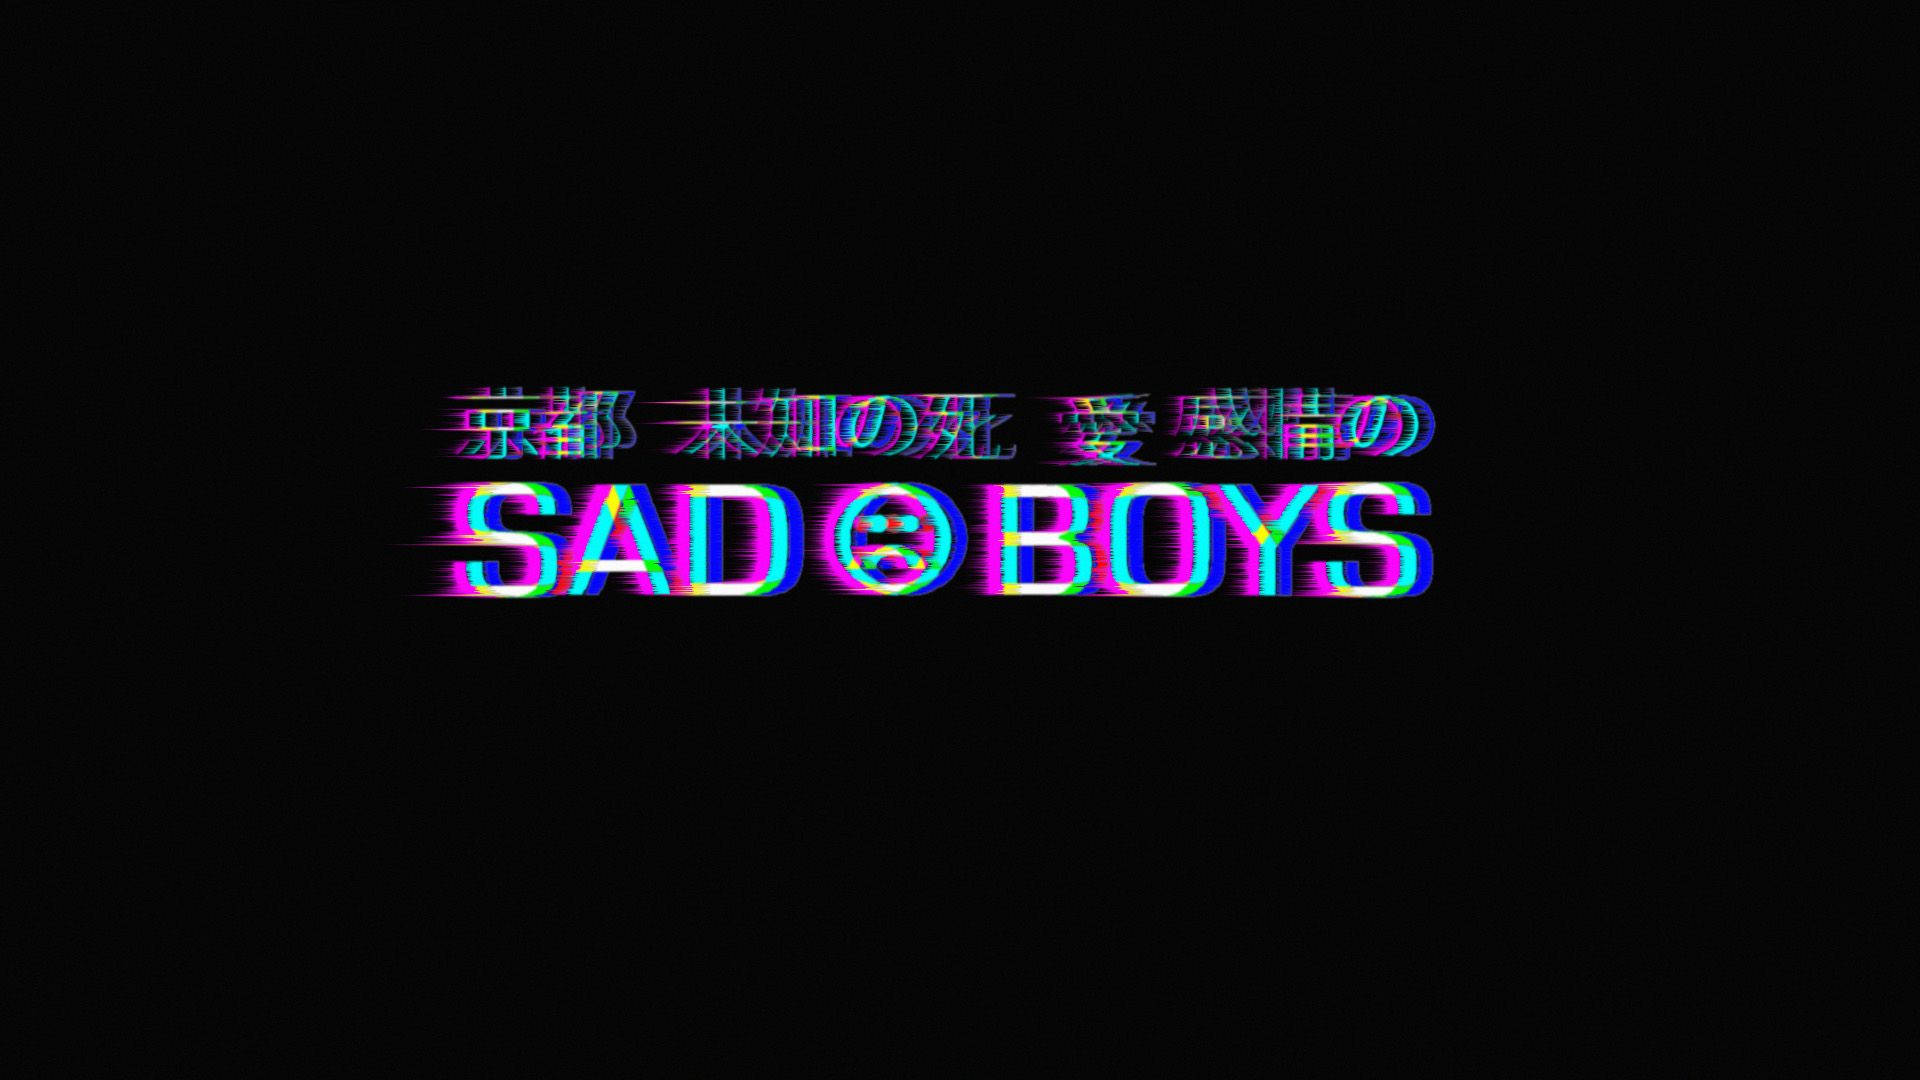 Glitch Sad Boys Text Aesthetic Background